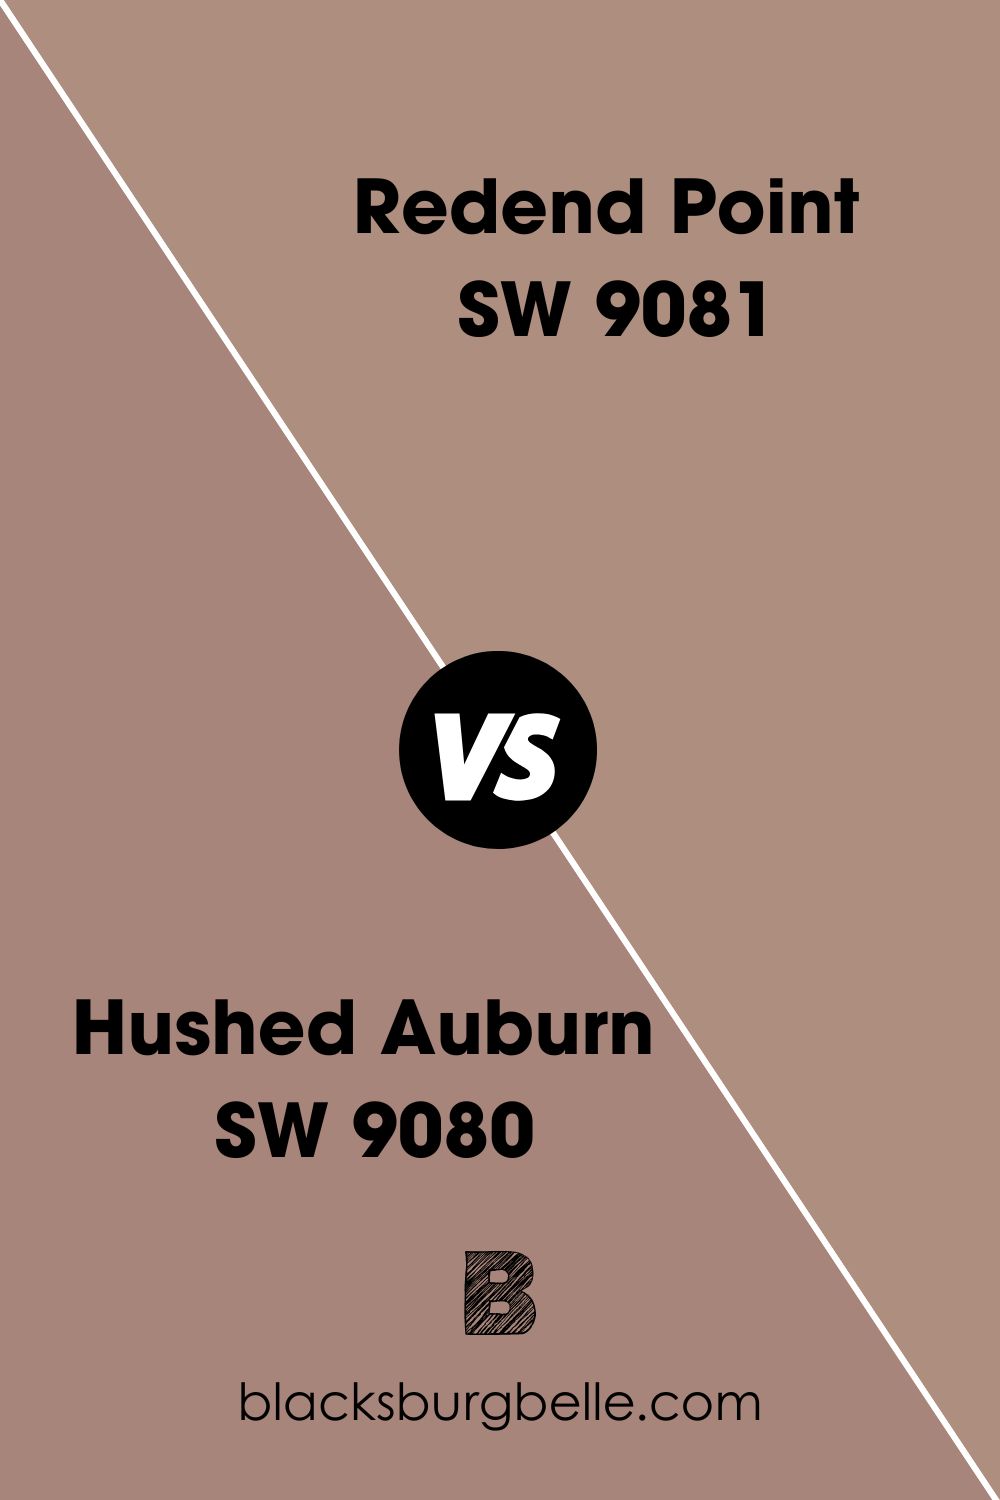 Hushed Auburn SW 9080